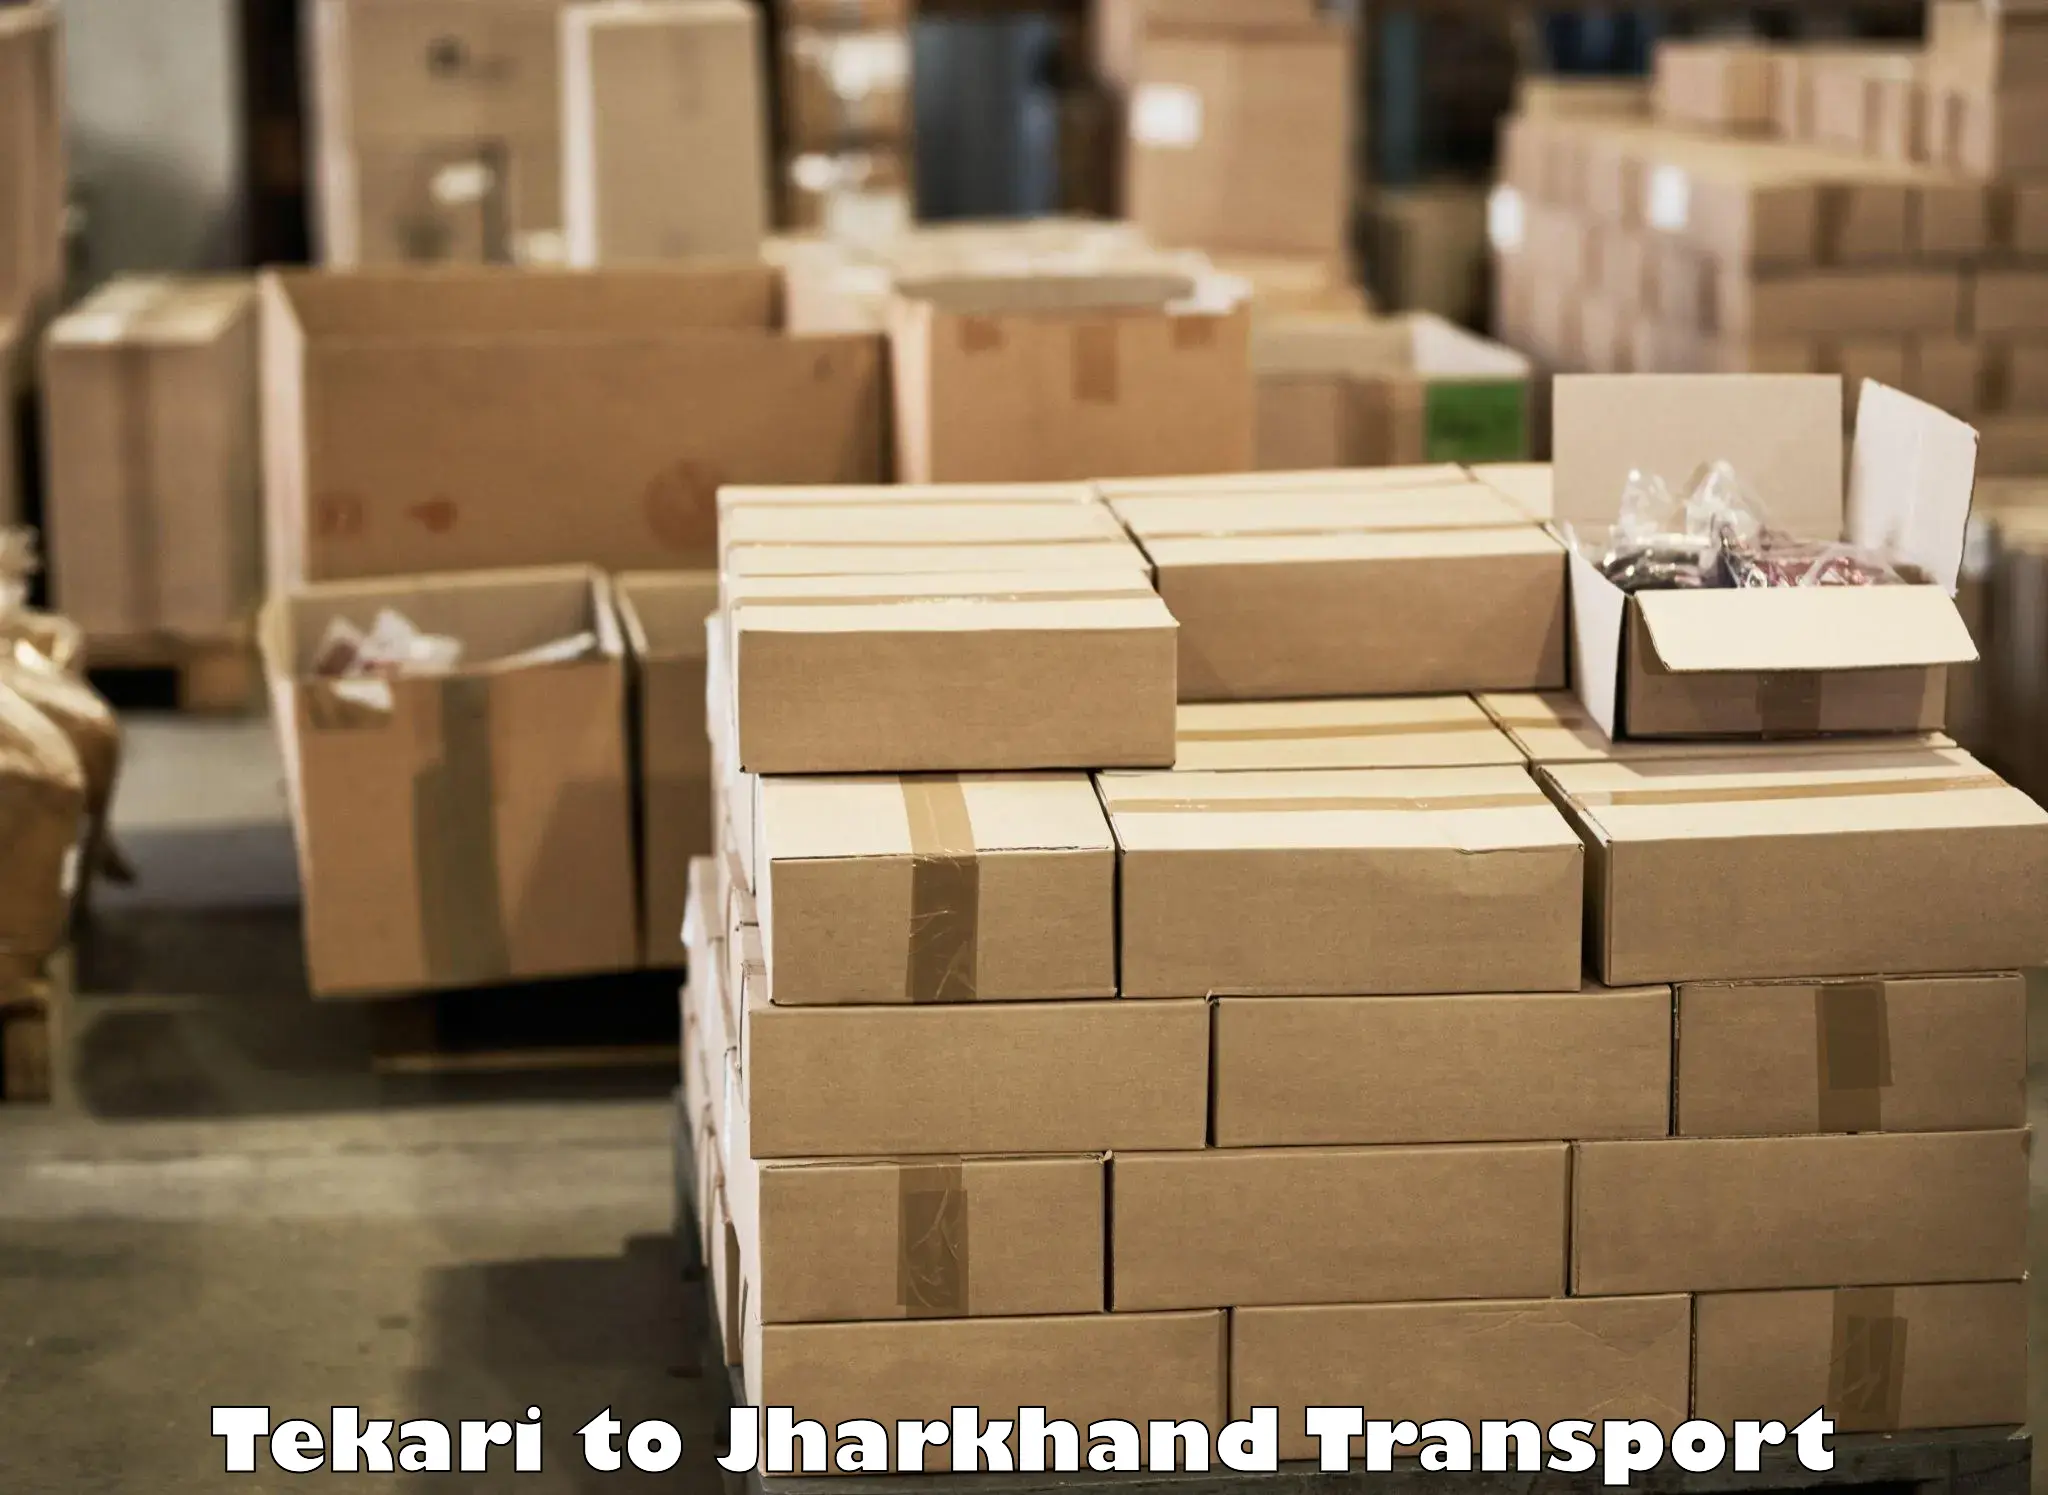 Commercial transport service Tekari to Koderma